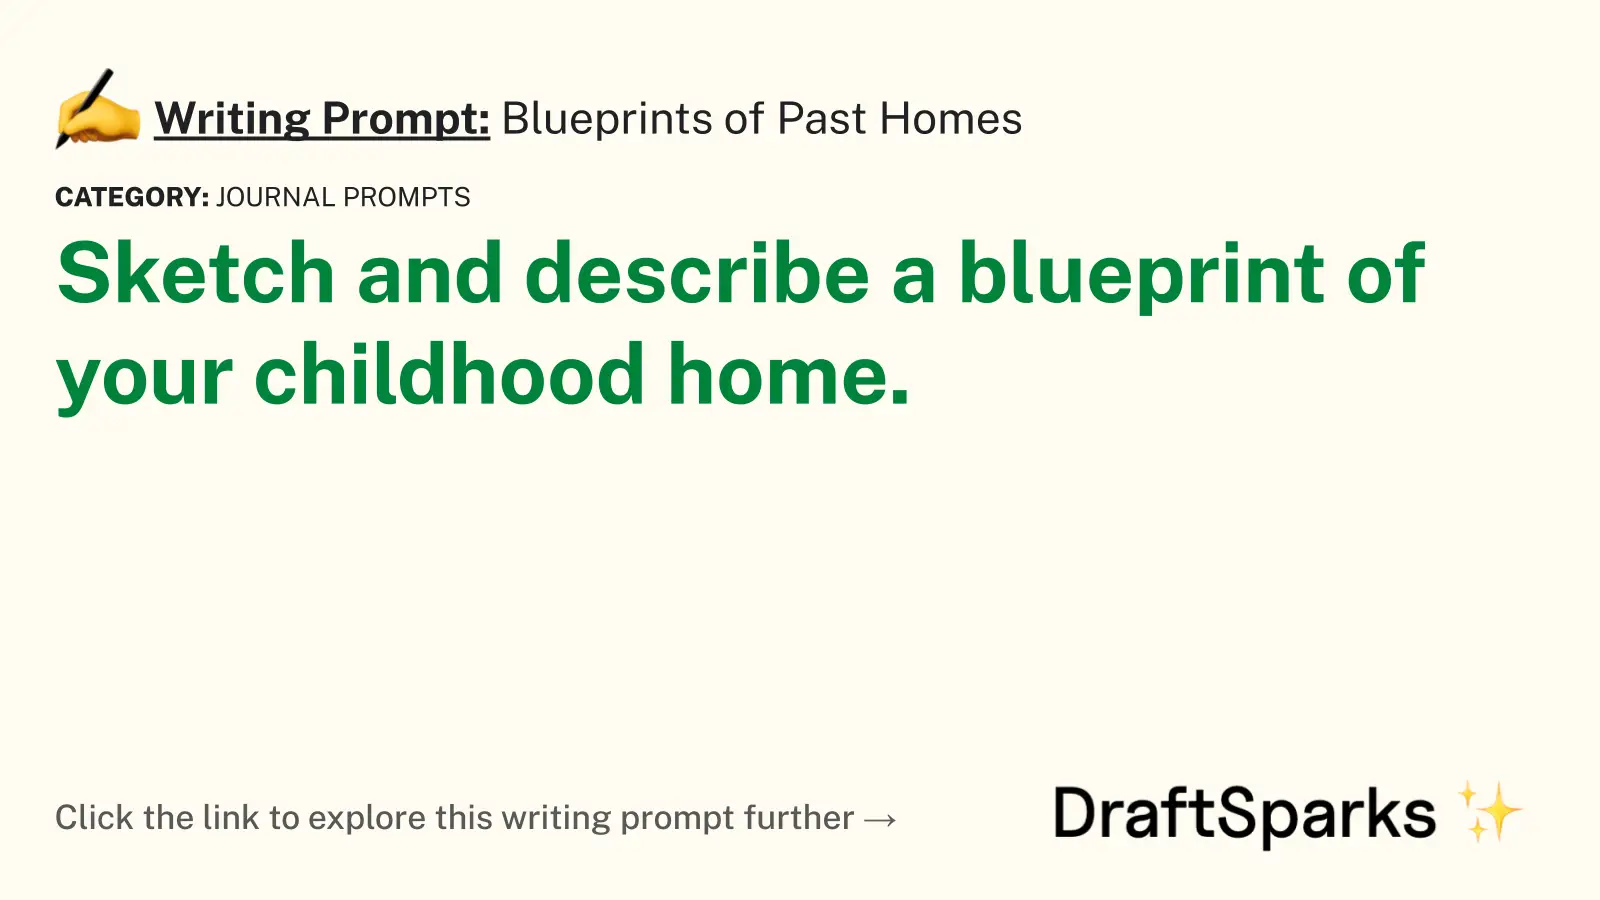 Blueprints of Past Homes